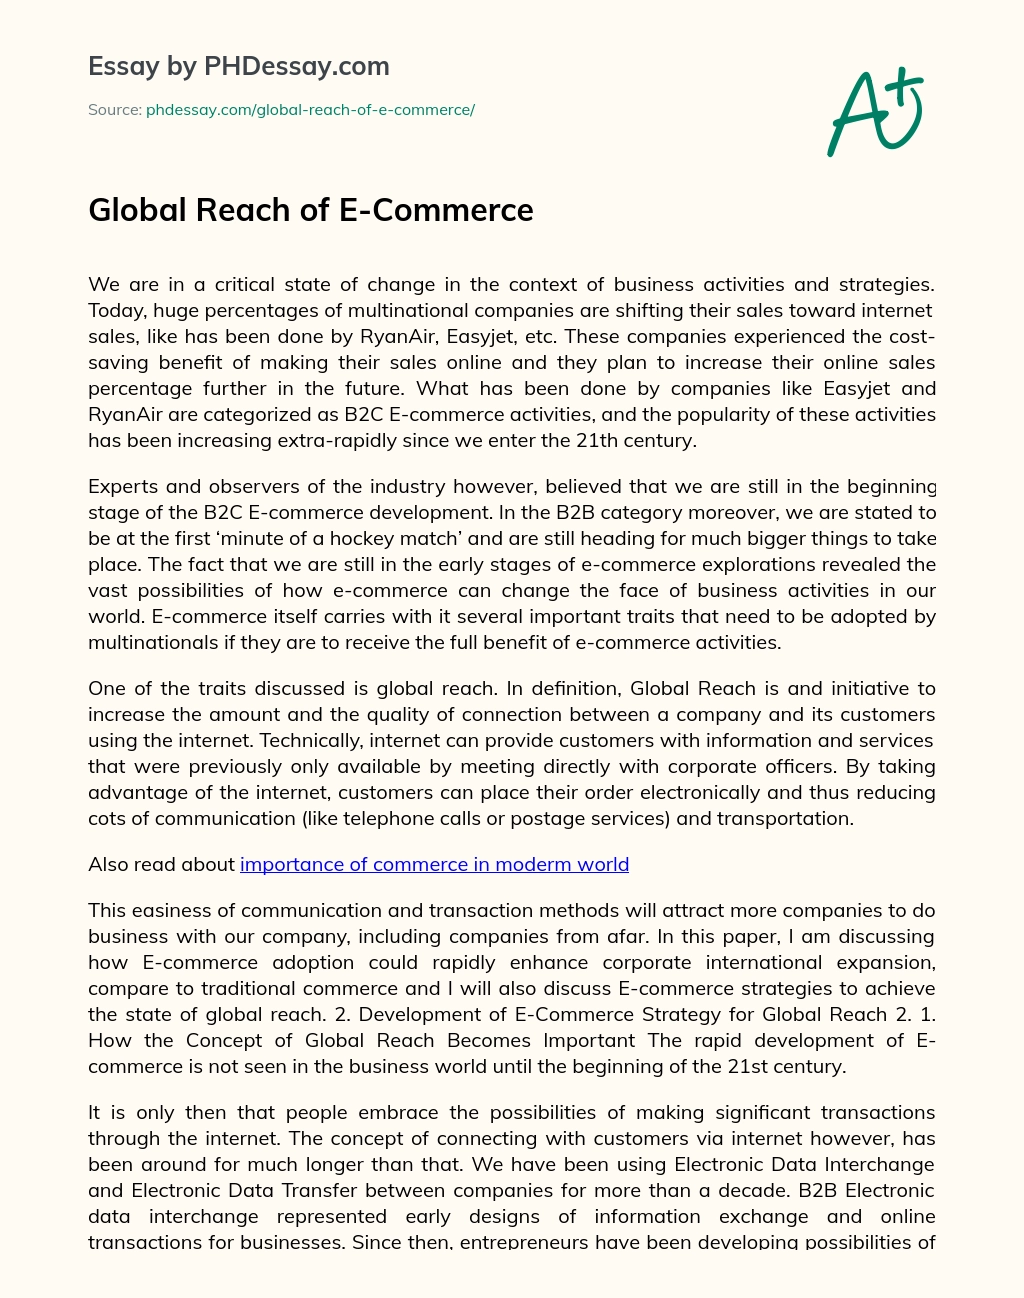 Global Reach of E-Commerce essay